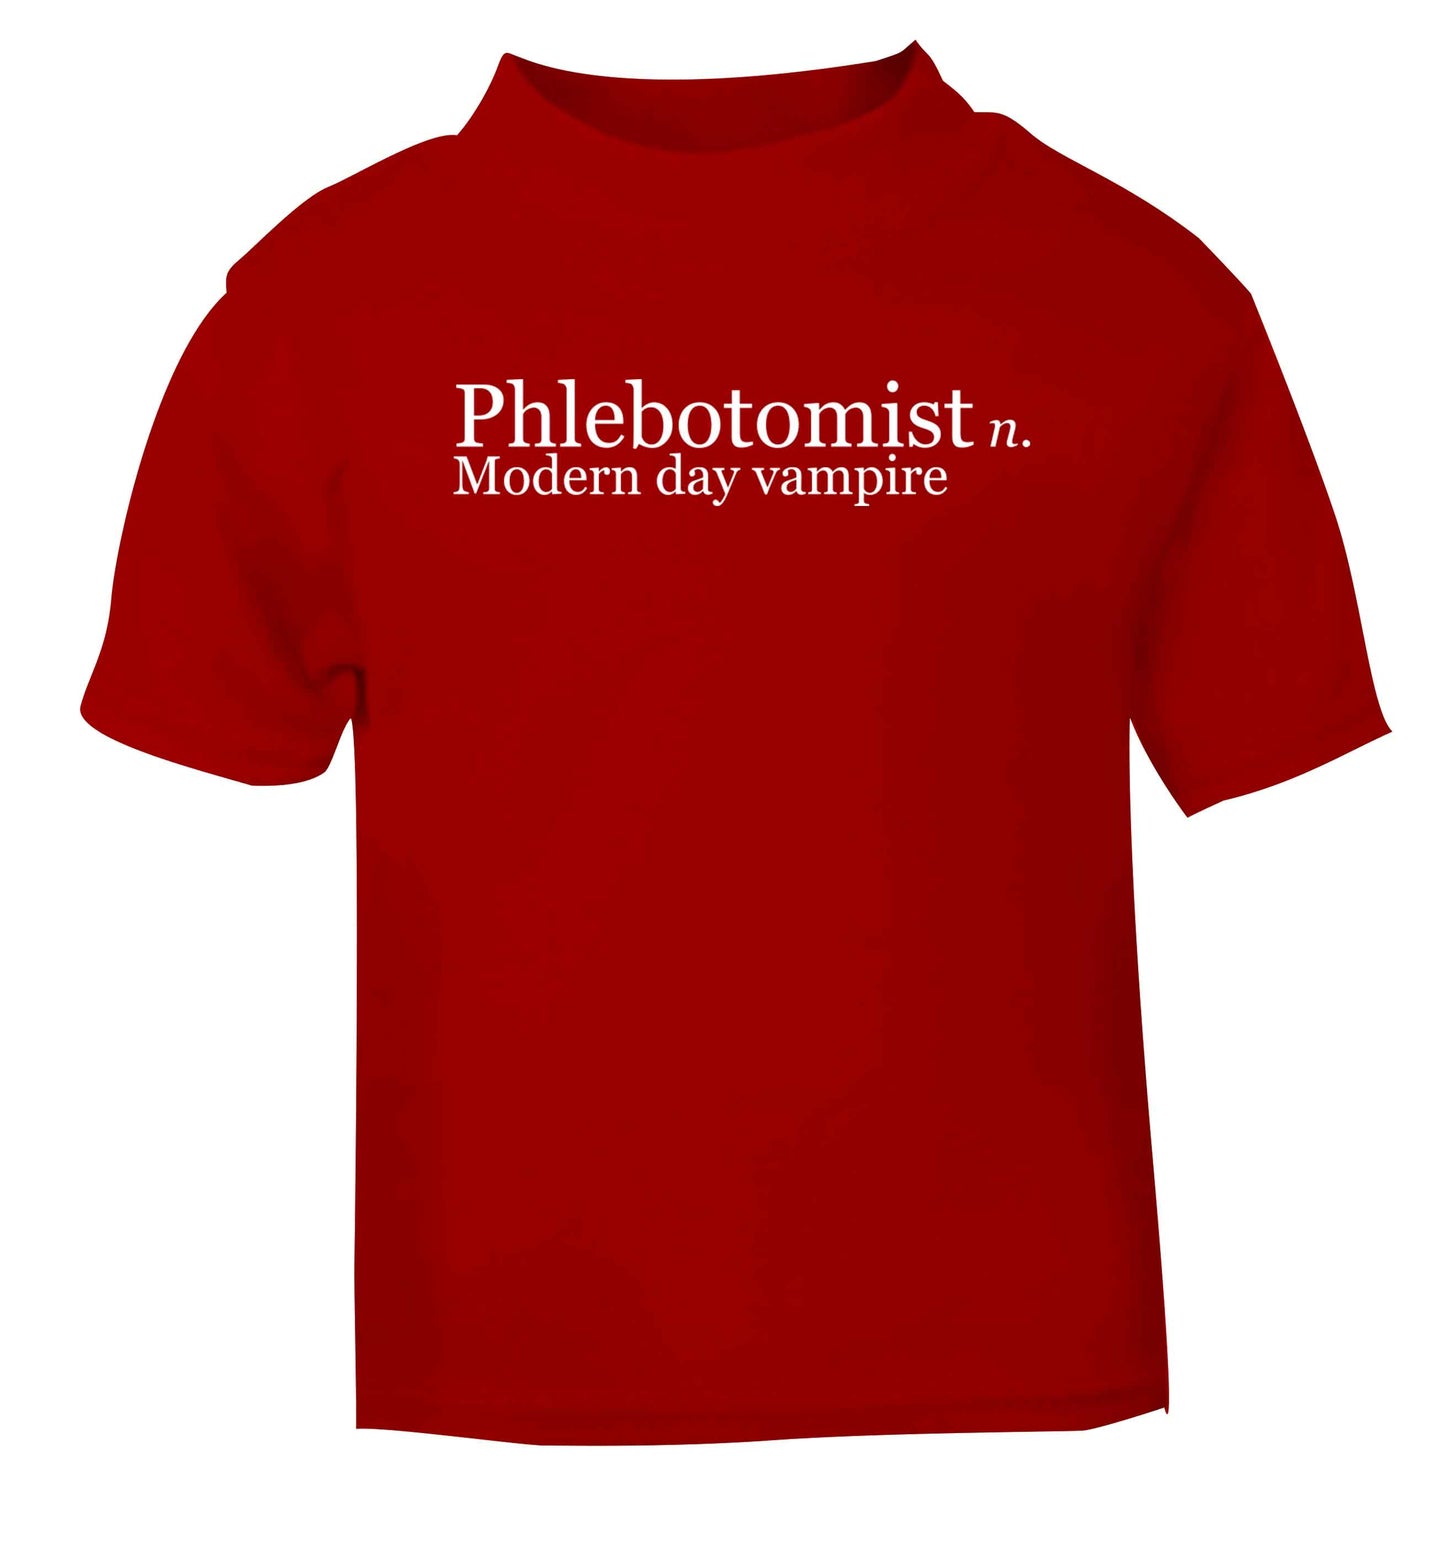 Phlebotomist - Modern day vampire red baby toddler Tshirt 2 Years